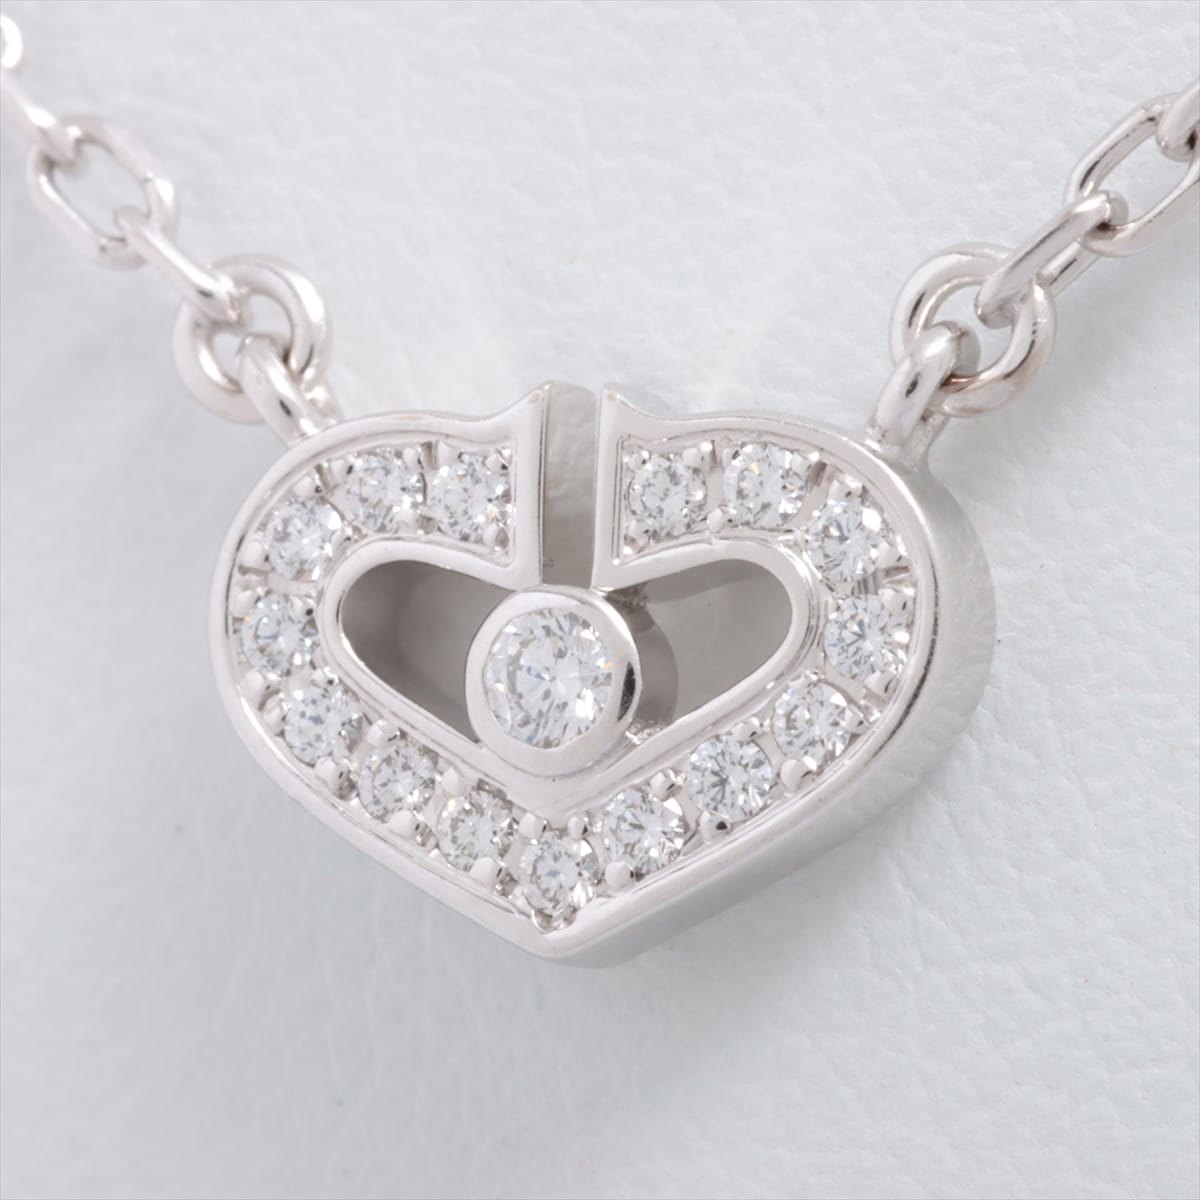 Cartier C Heart diamond Necklace 750 WG 4.4g